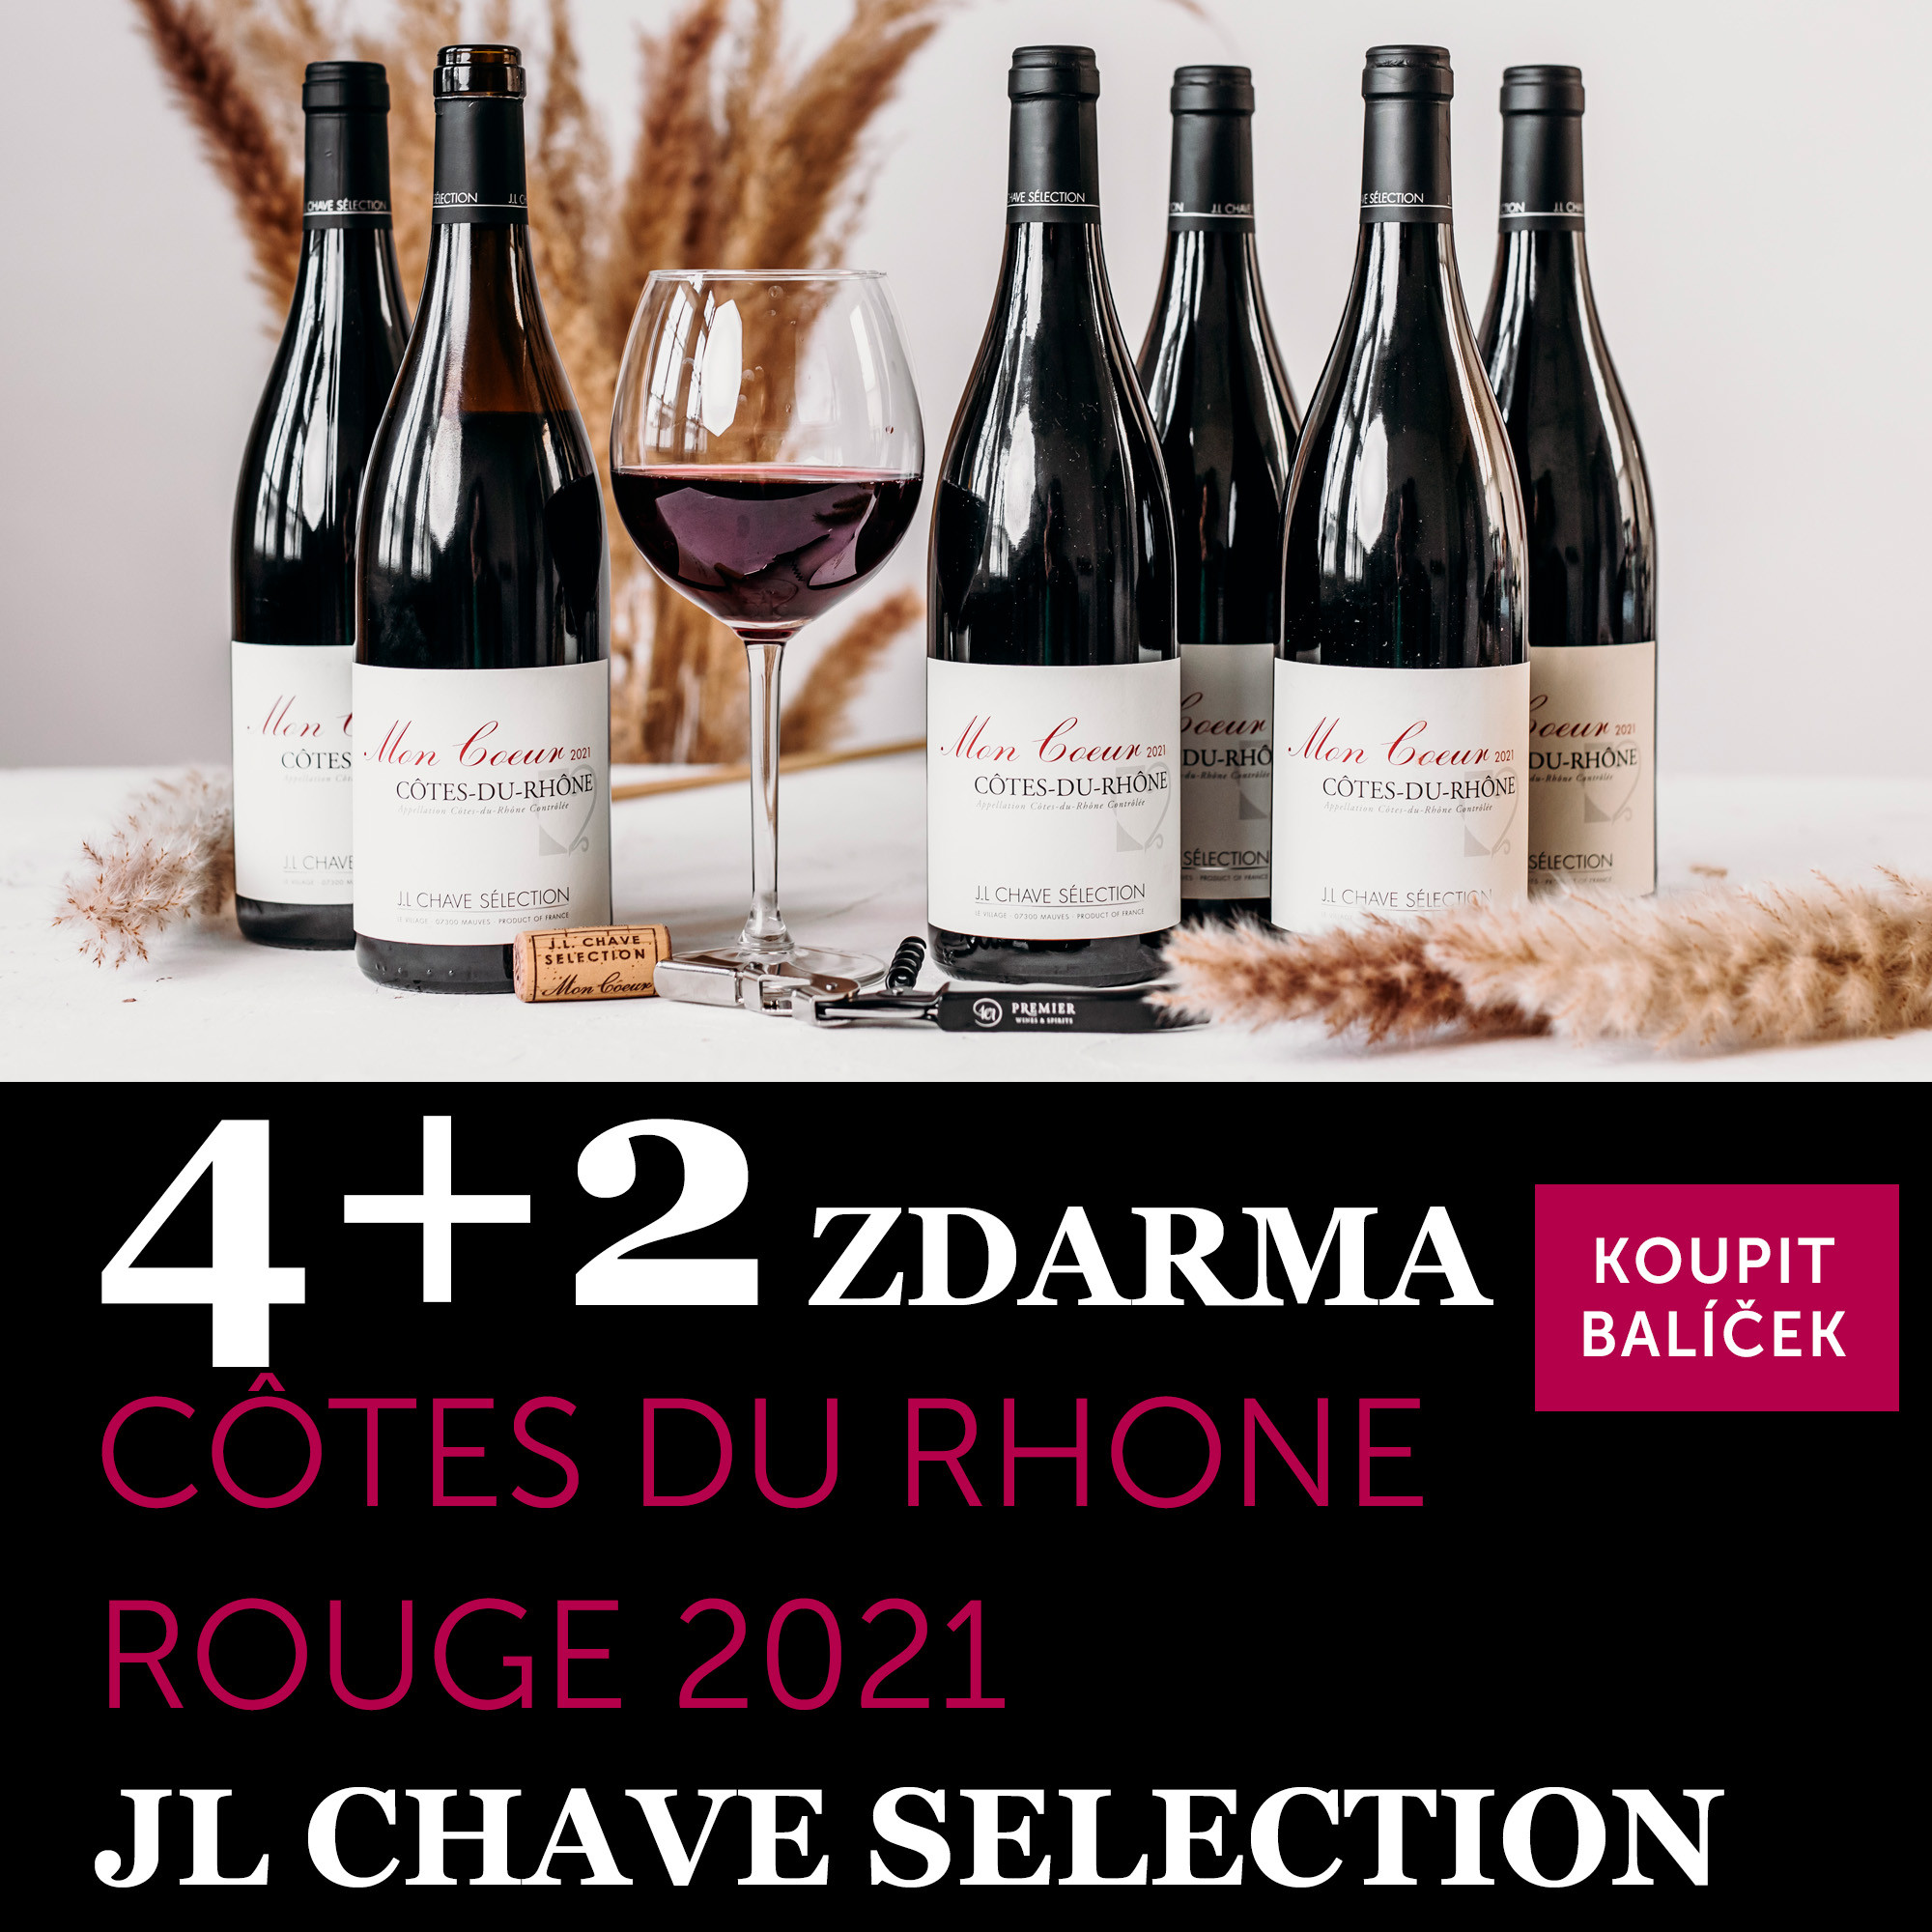 JL Chave Selection Cotes du Rhone Mon Coeur 2021 4+2 zdarma